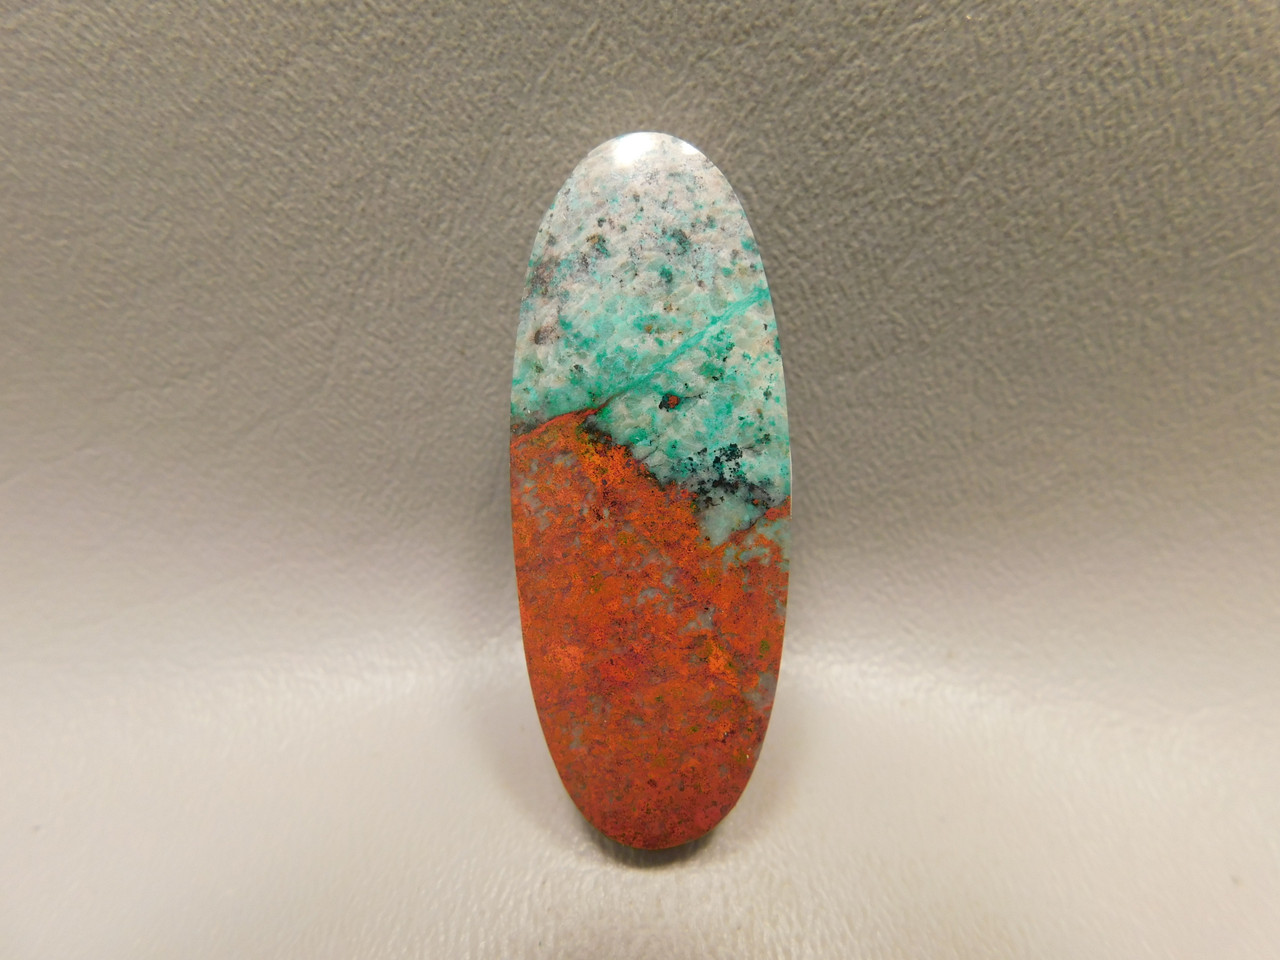 Sonoran Sunset Semiprecious Drilled Stone Bead Pendant #4